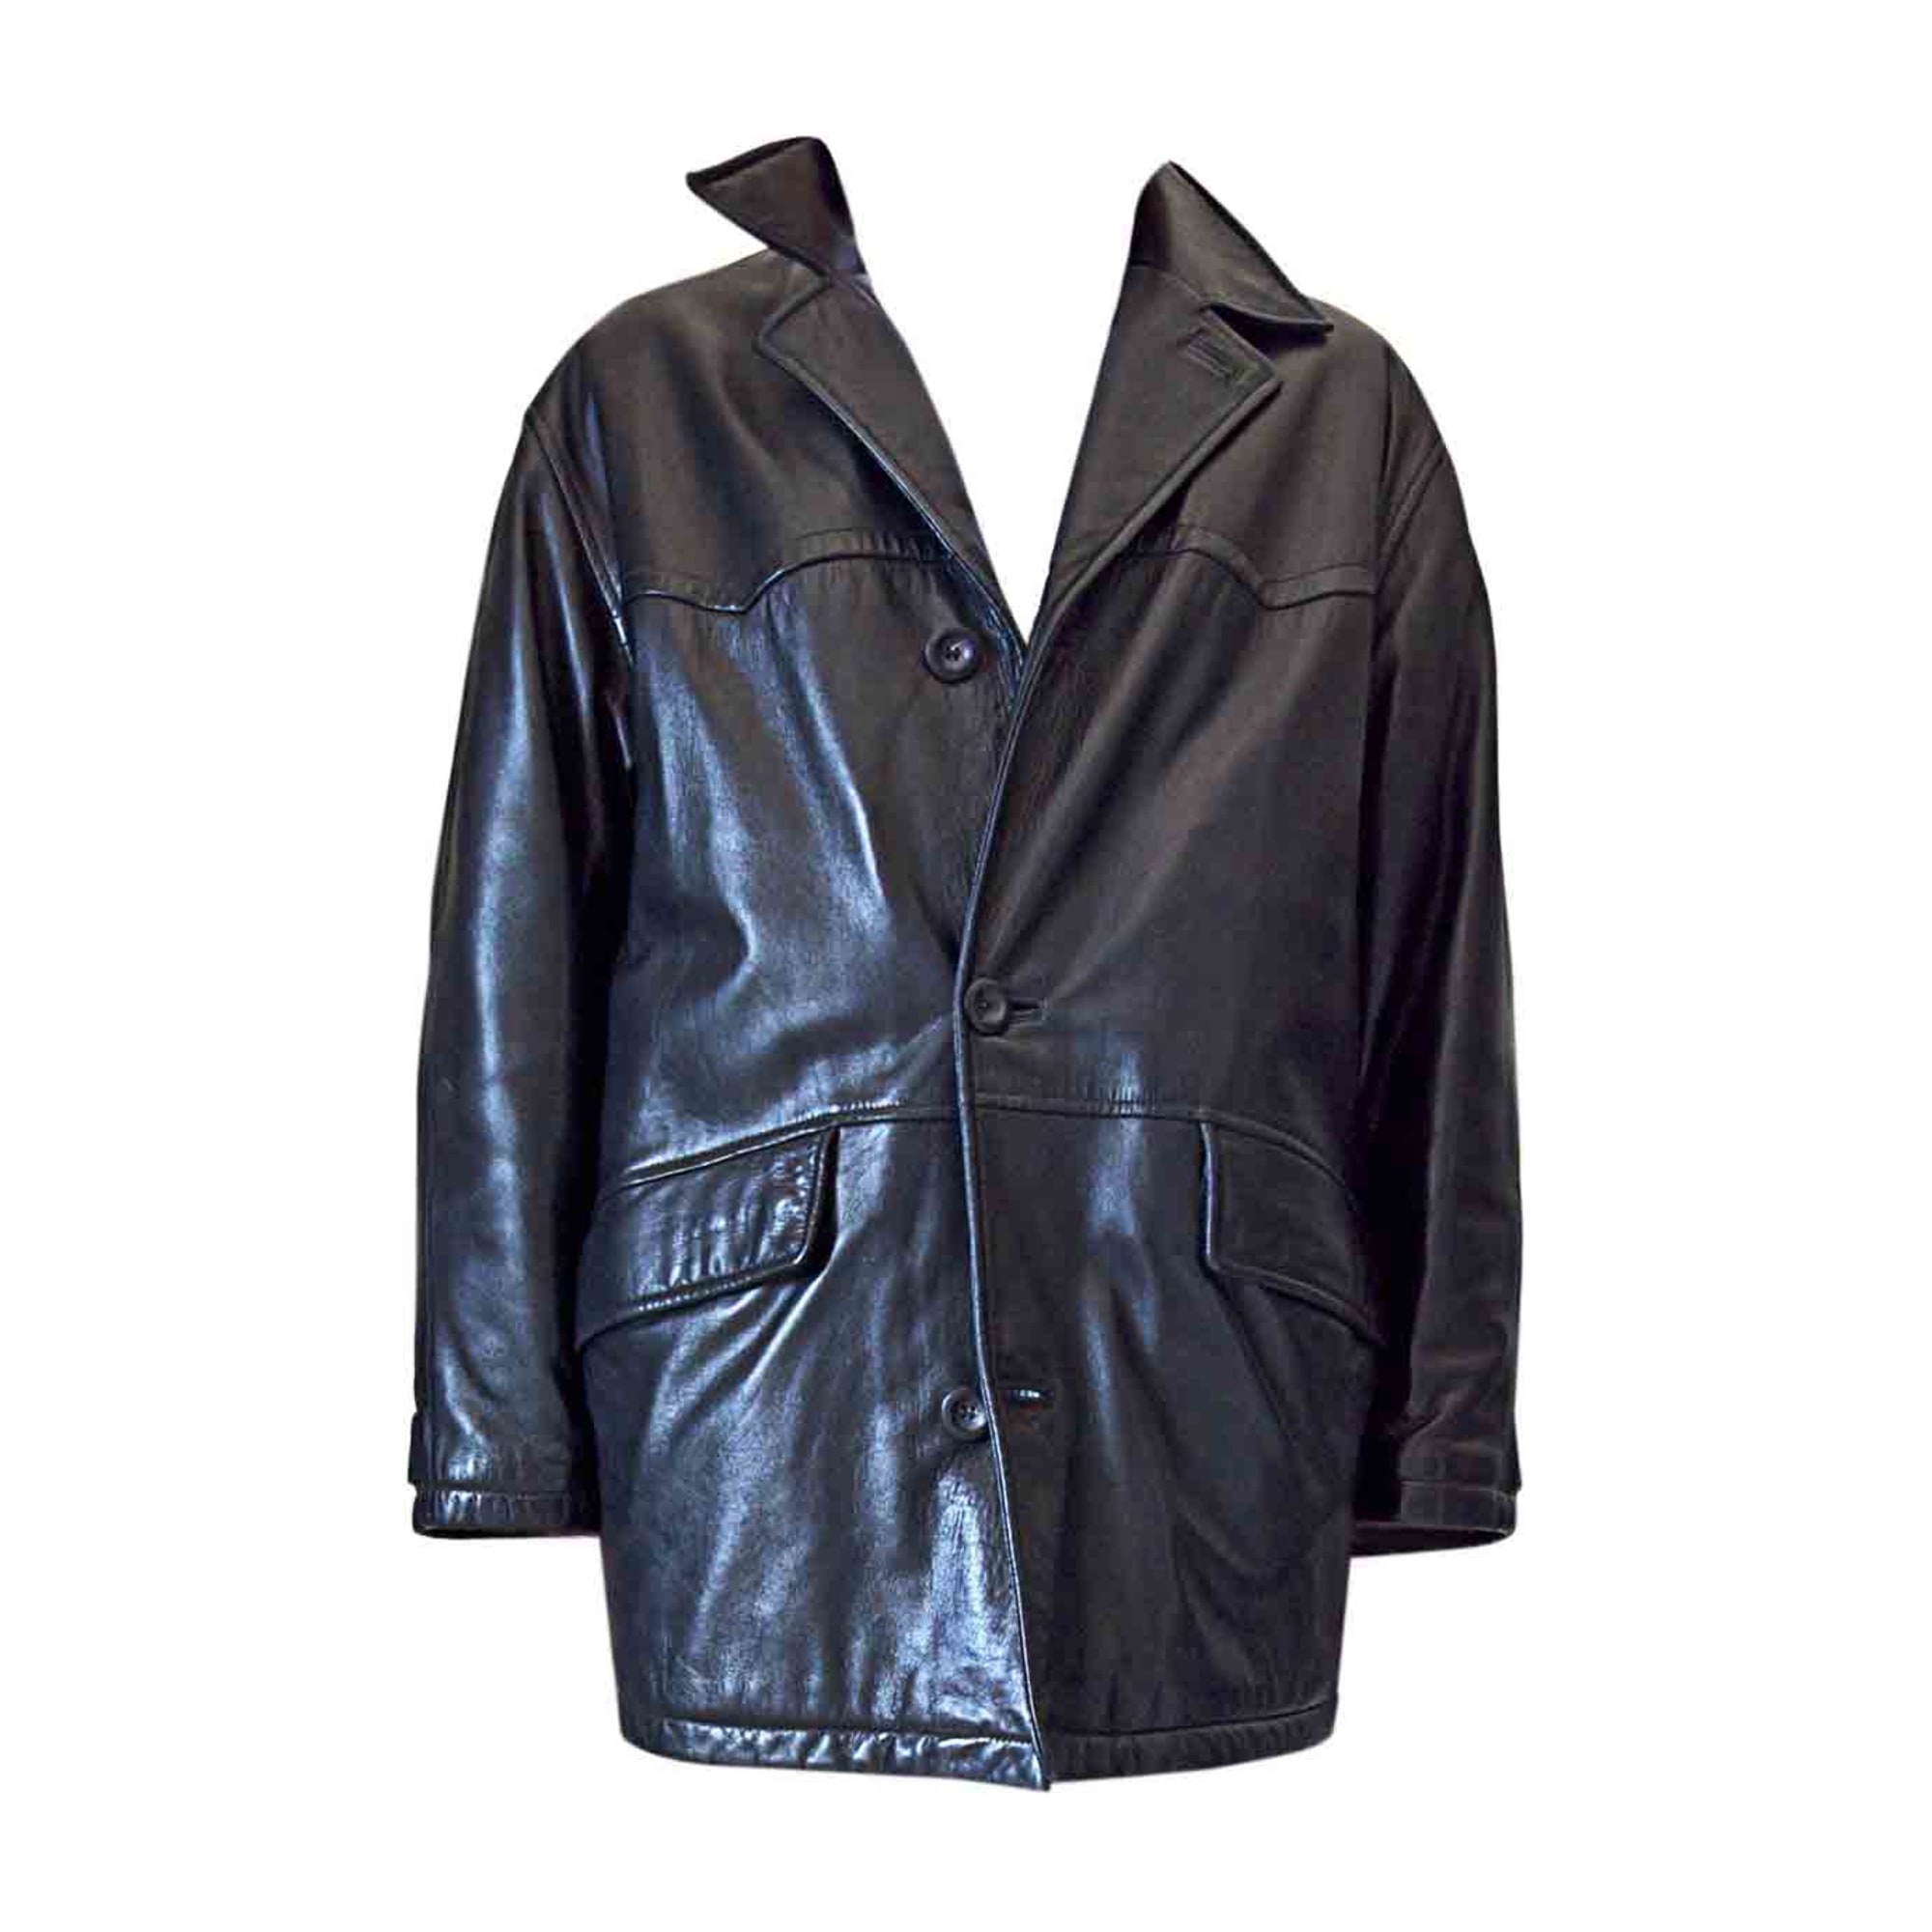 Veste en cuir HUGO BOSS 50 (M) noir vendu par Christian 56447367 - 4033754